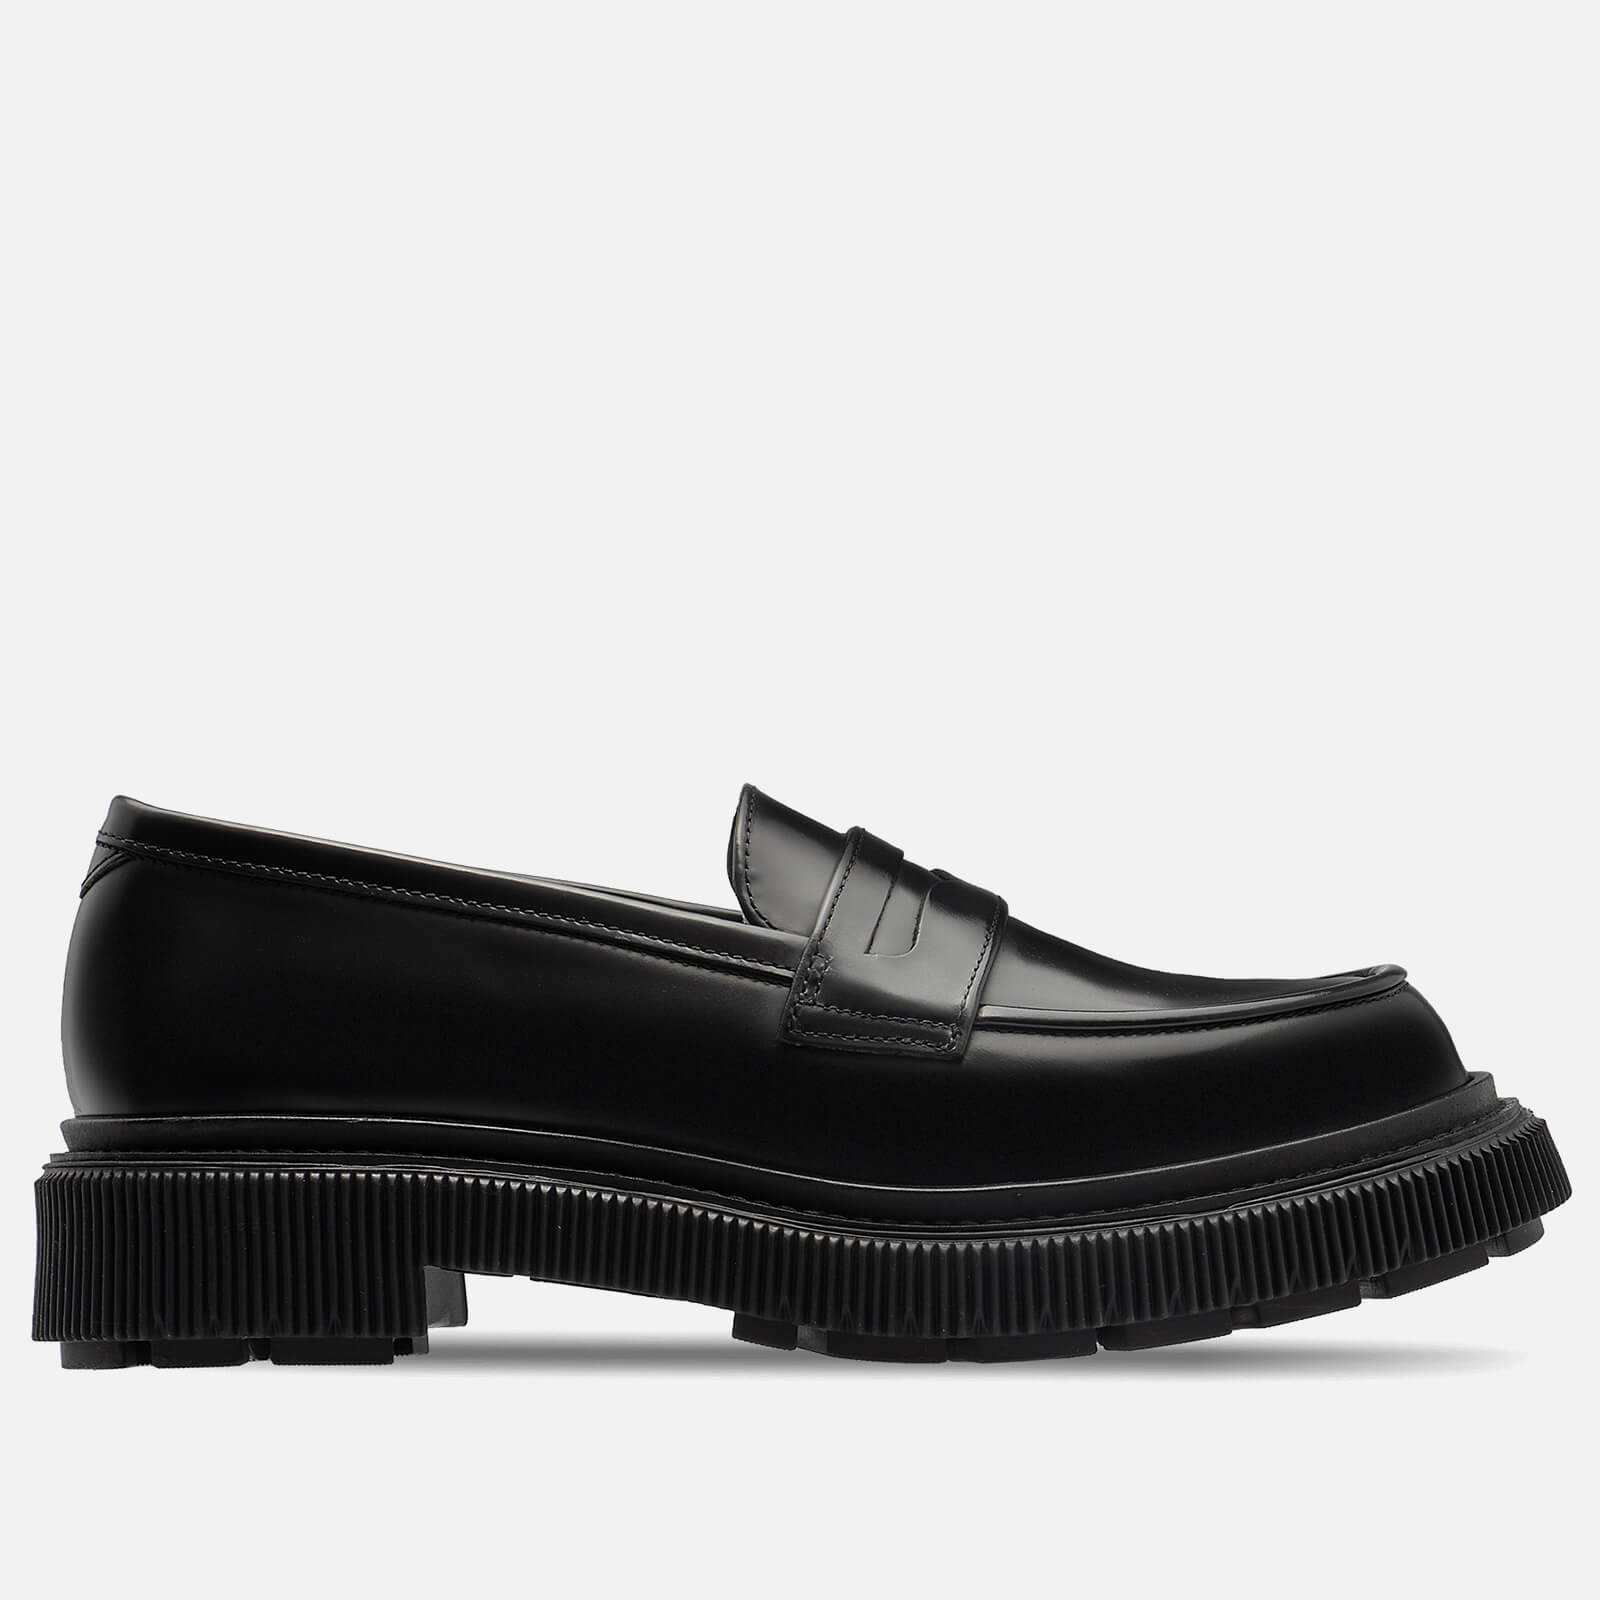 Adieu Men's Type 159 Leather Loafers - Black - UK 8